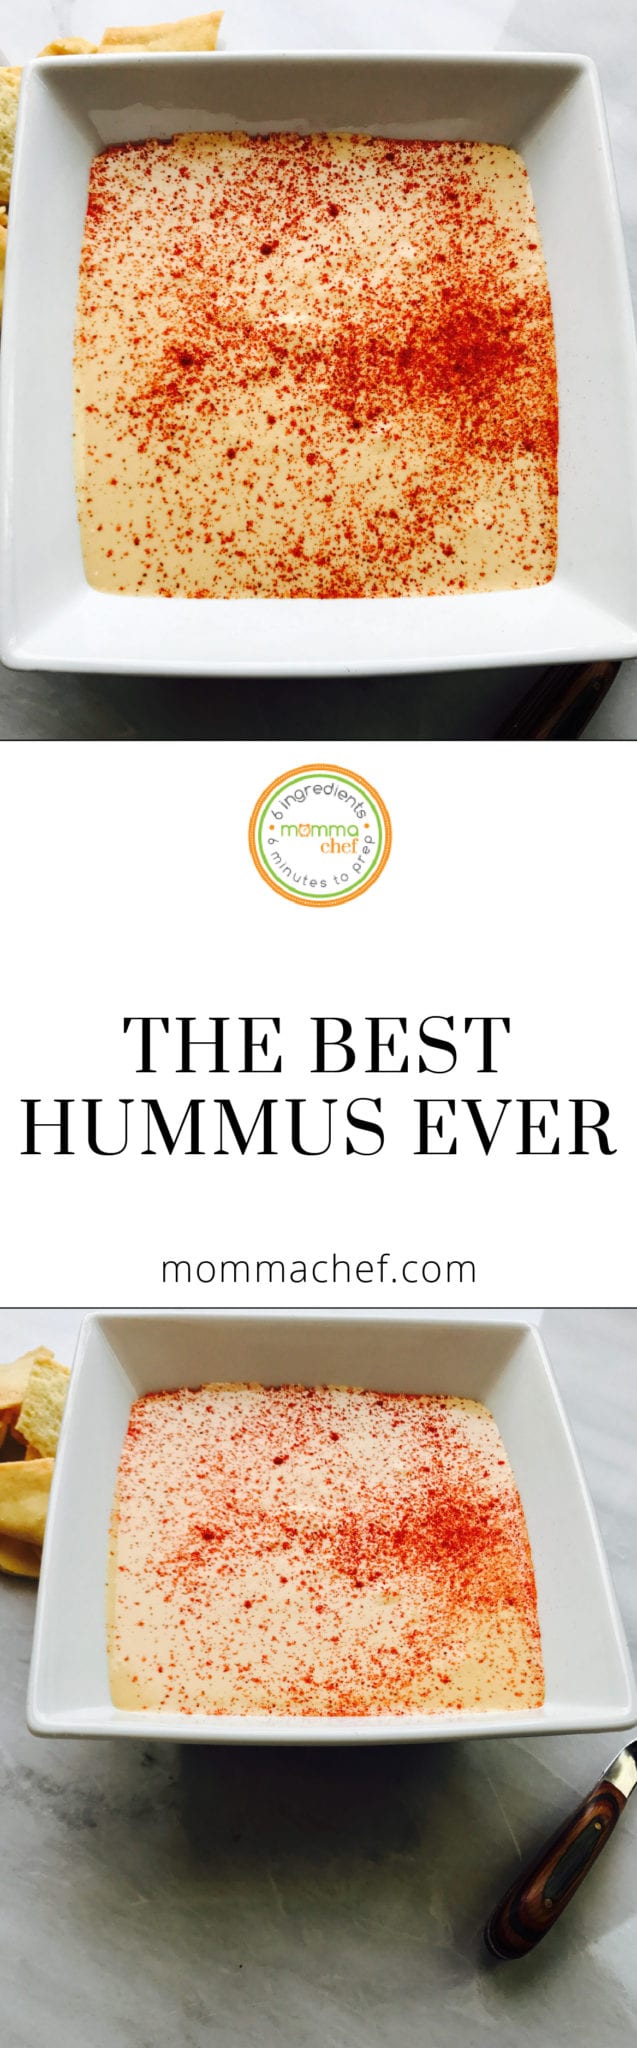 Quick and Easy Hummus Recipe